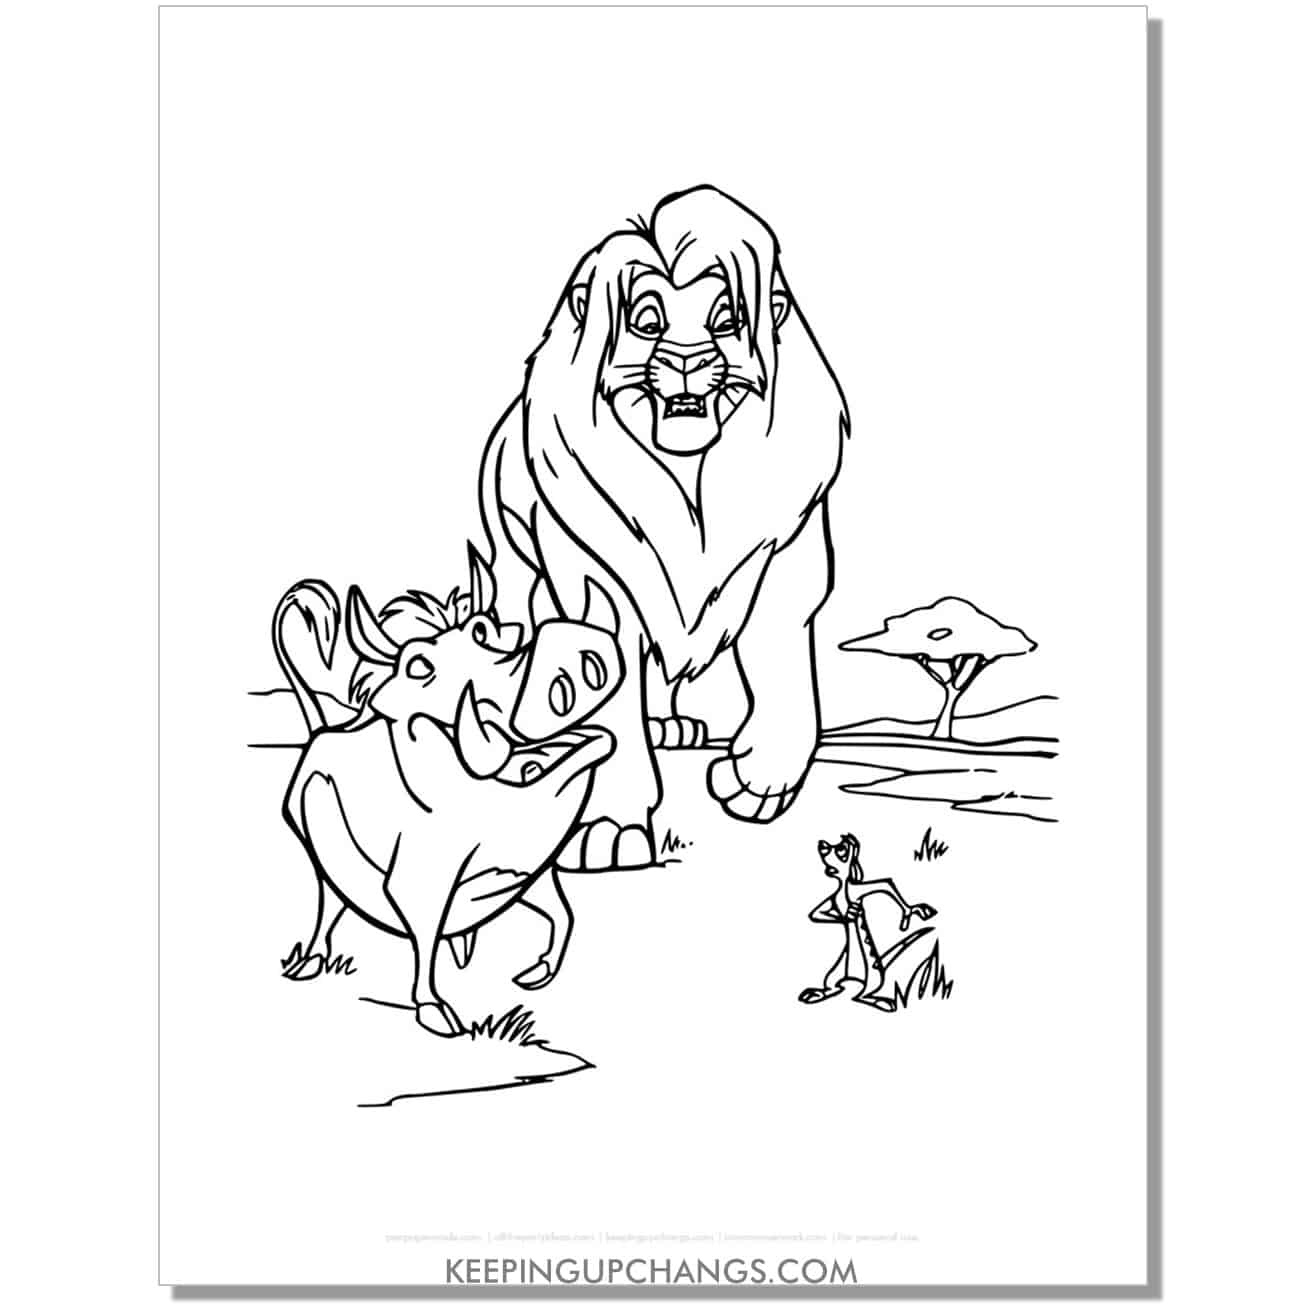 simba with timon, pumbaa lion king coloring page, sheet.